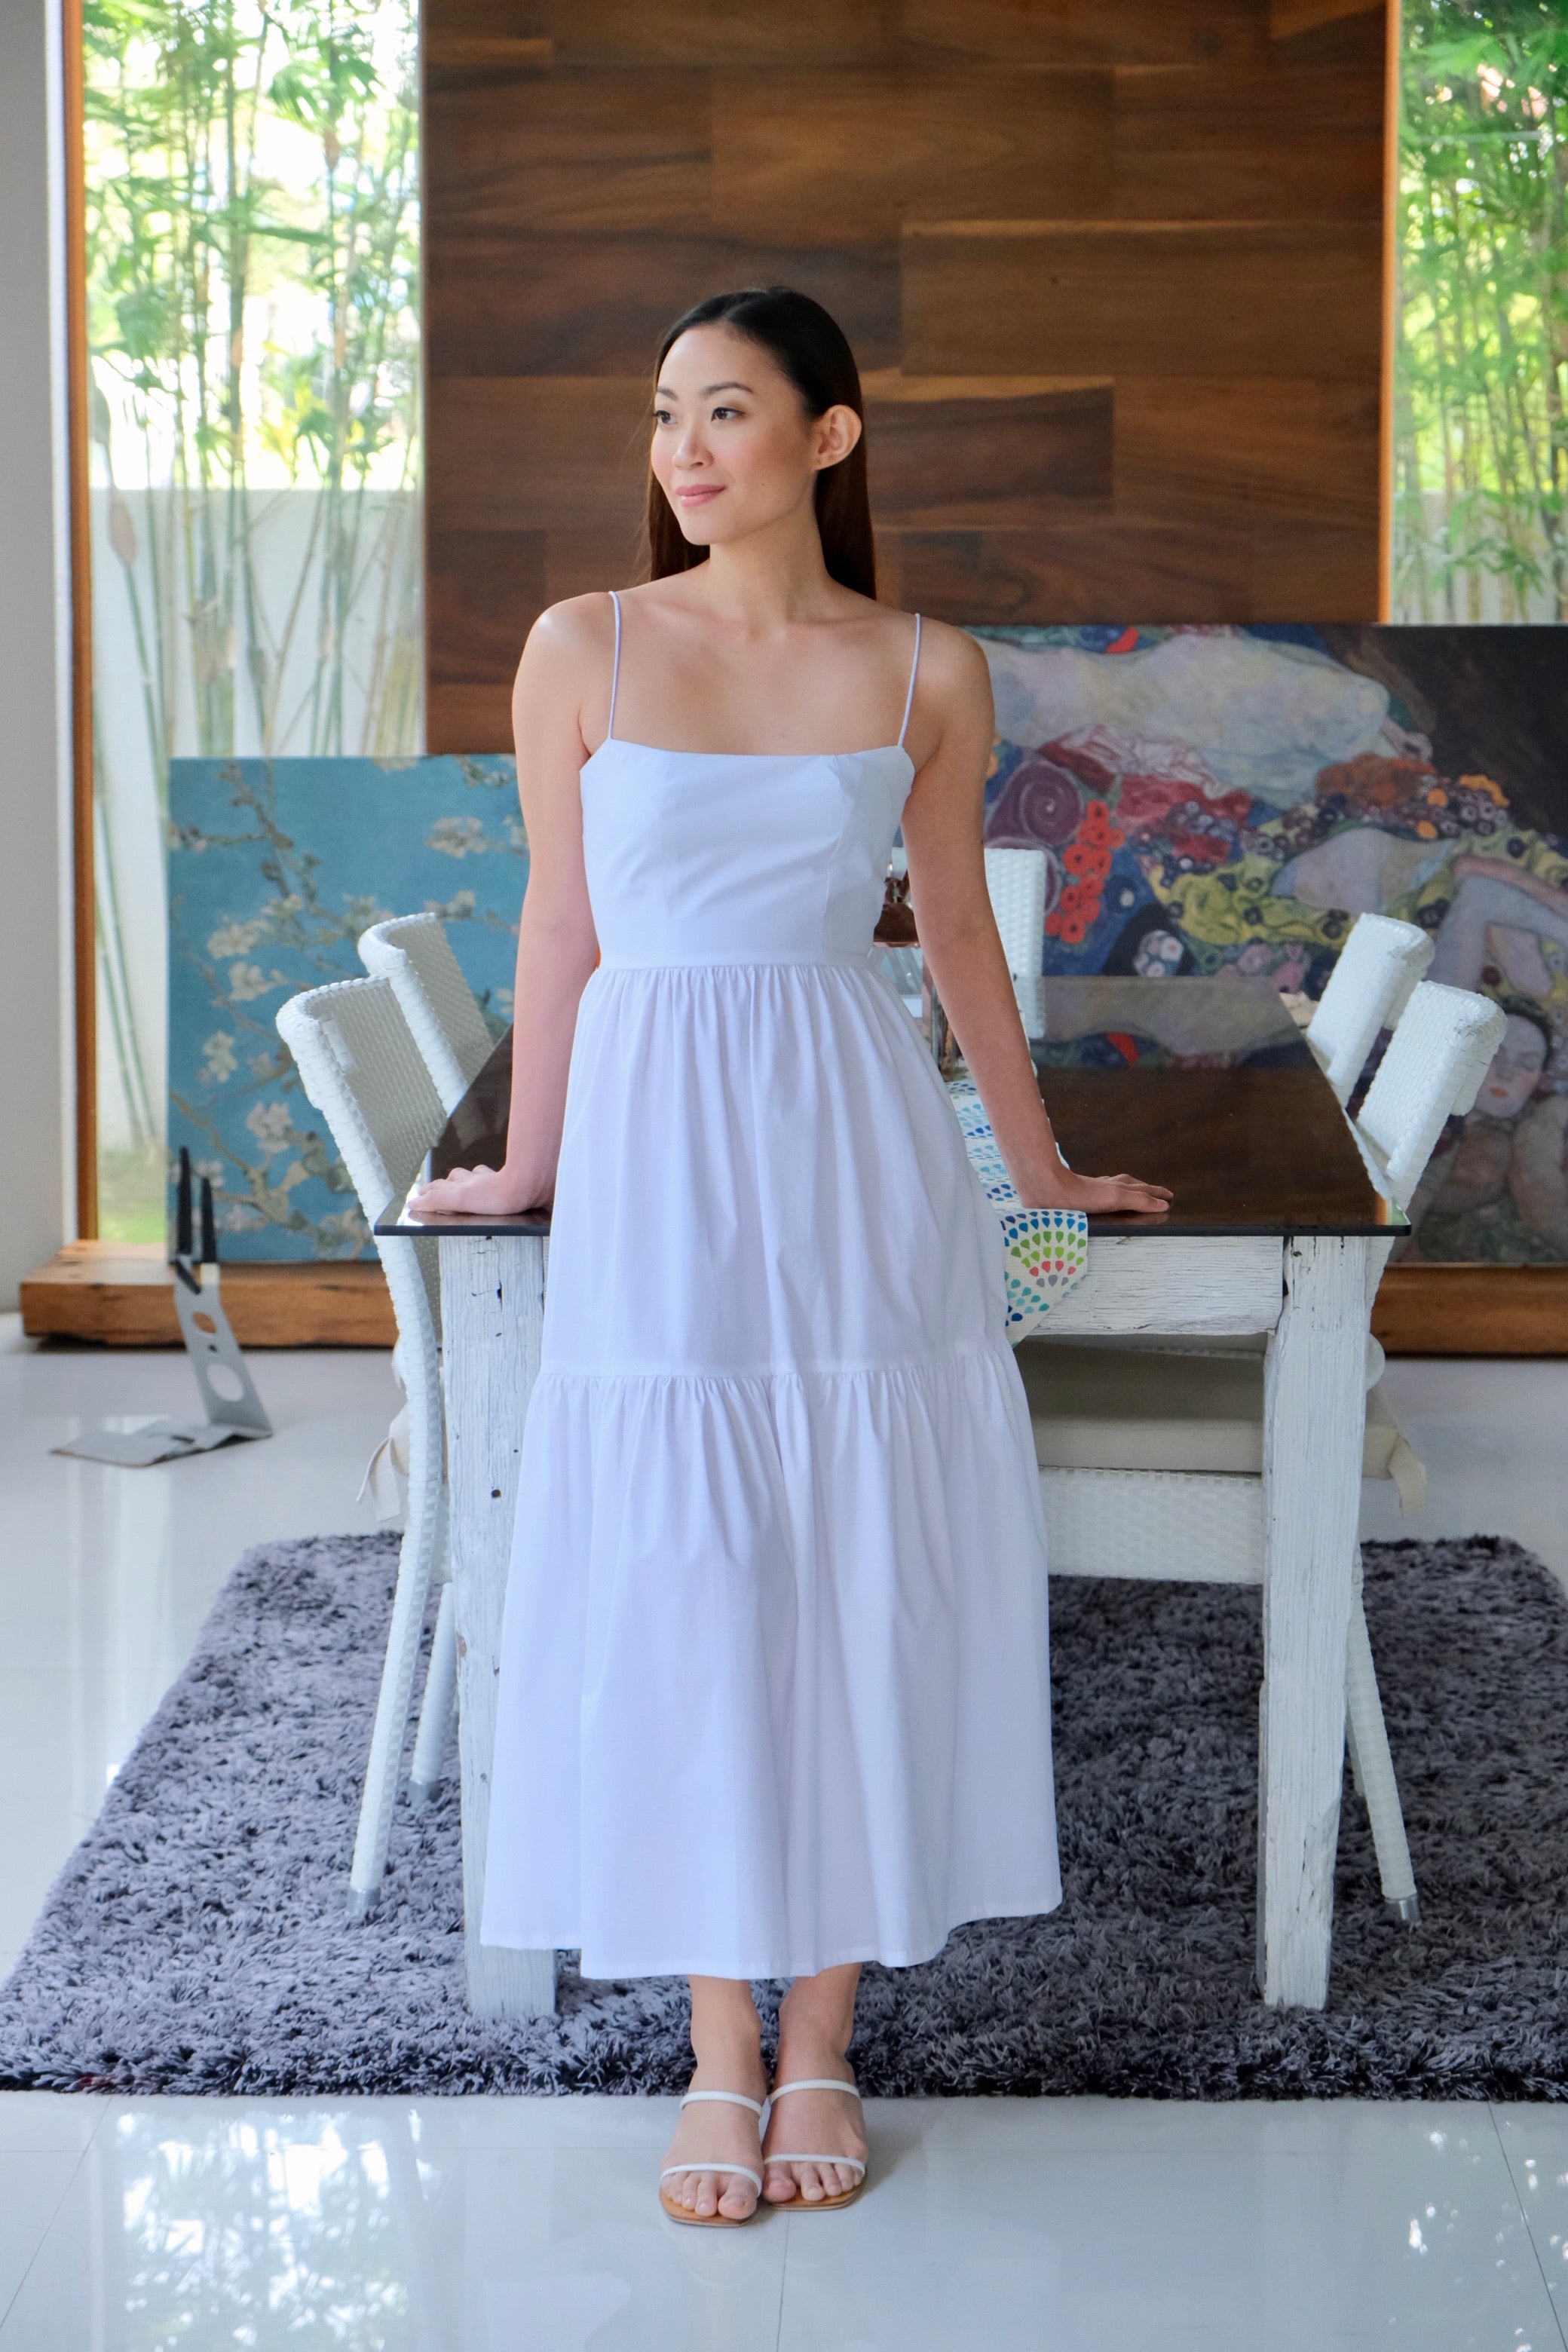 Penelope Dress in White